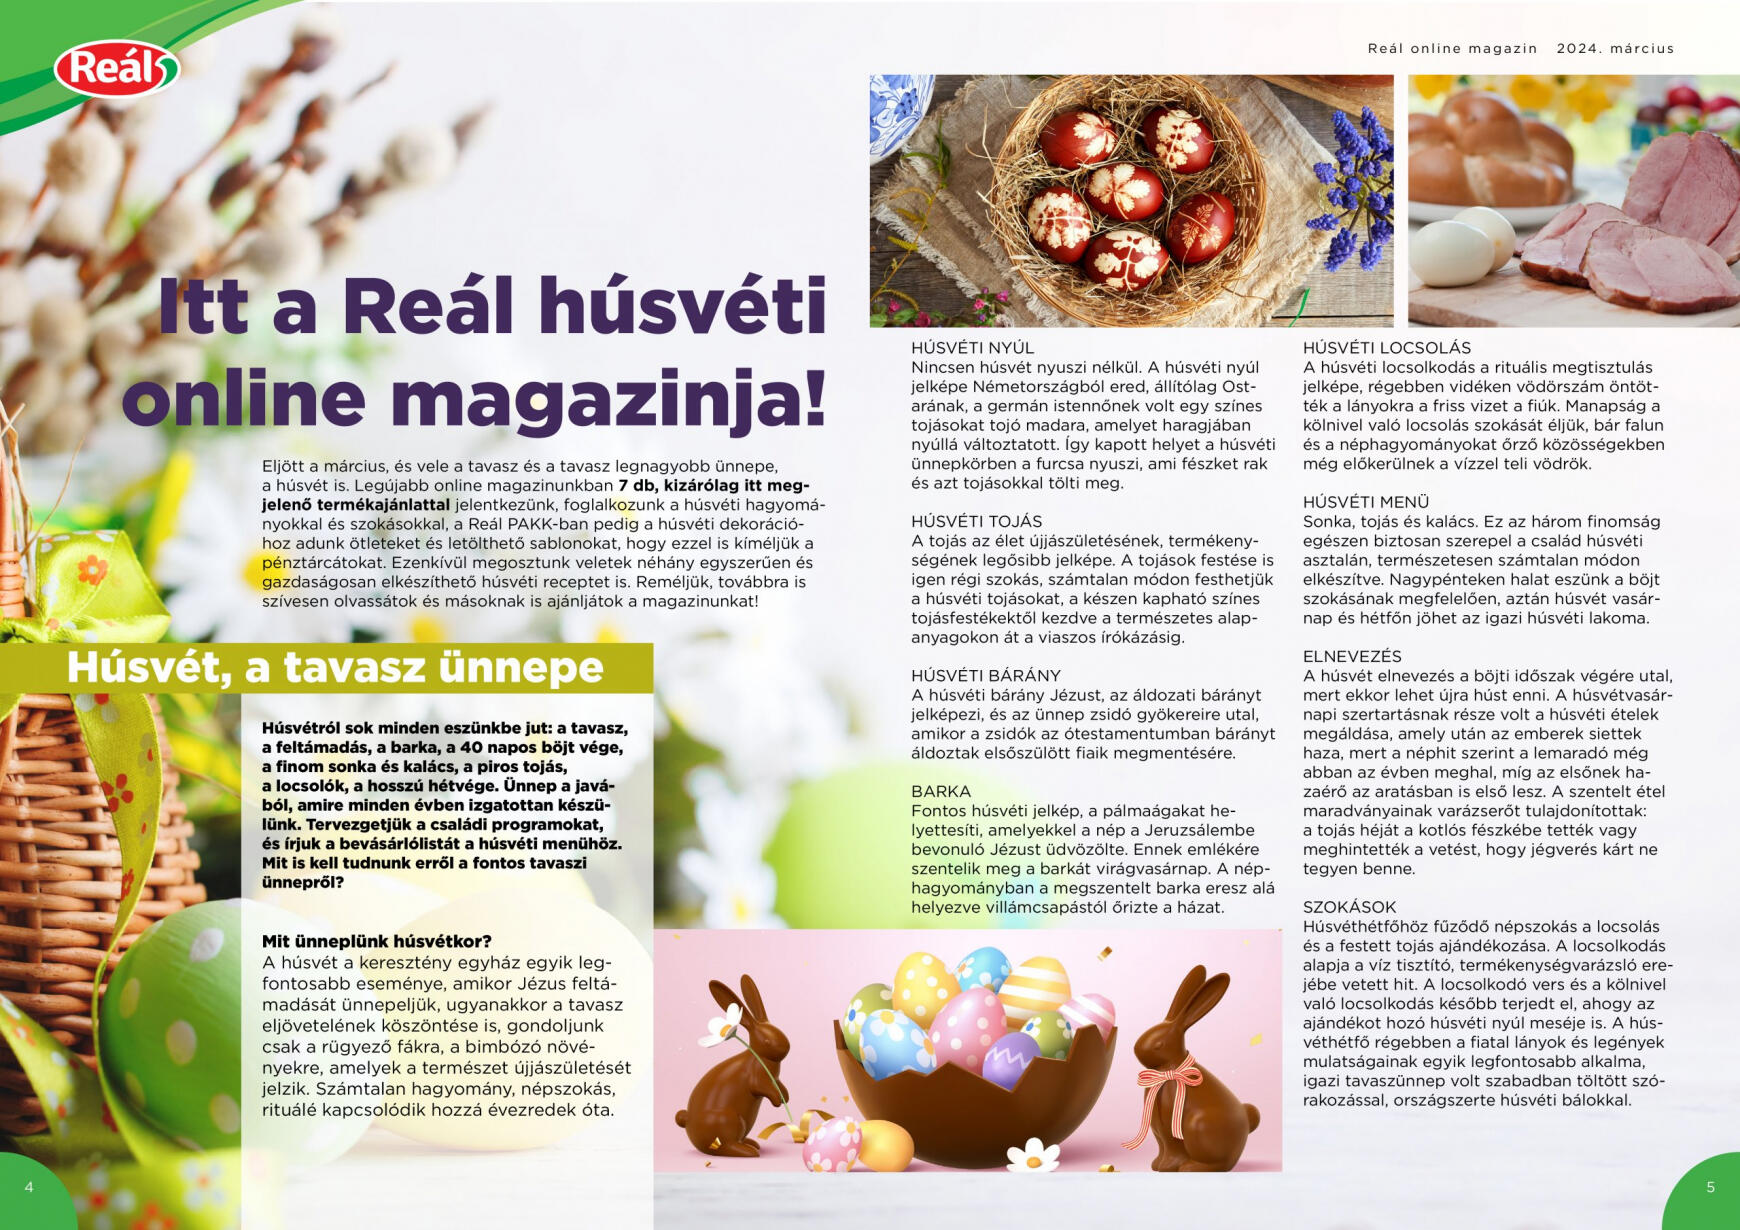 real - Reál - Online Magazin dátumtól érvényes 2024.03.06. - page: 3